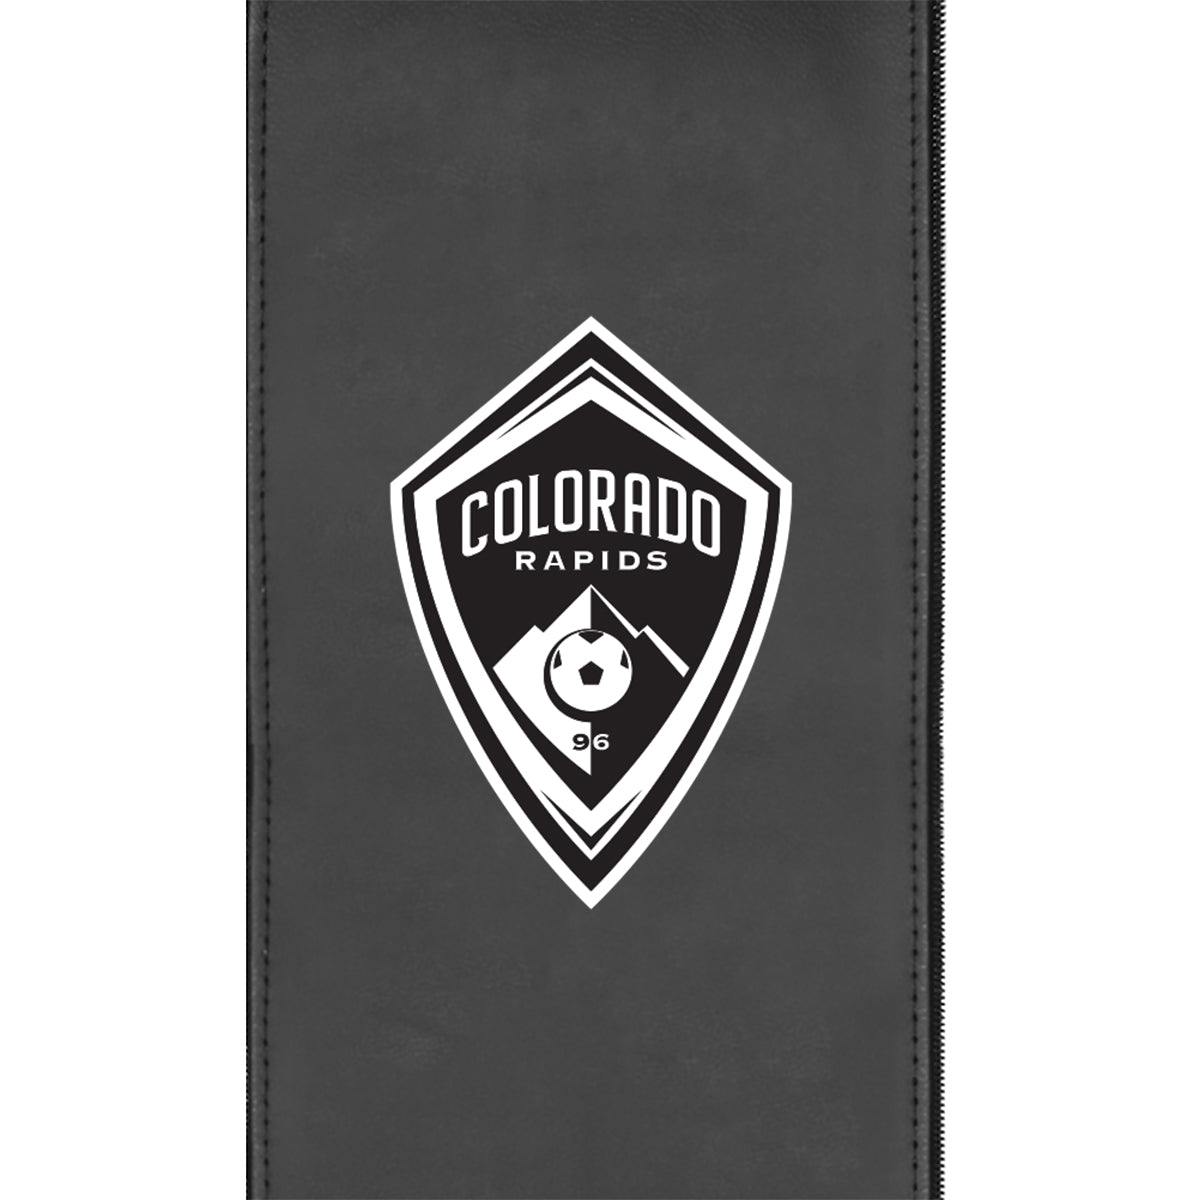 Game Rocker 100 with Colorado Rapids Alternate Logo